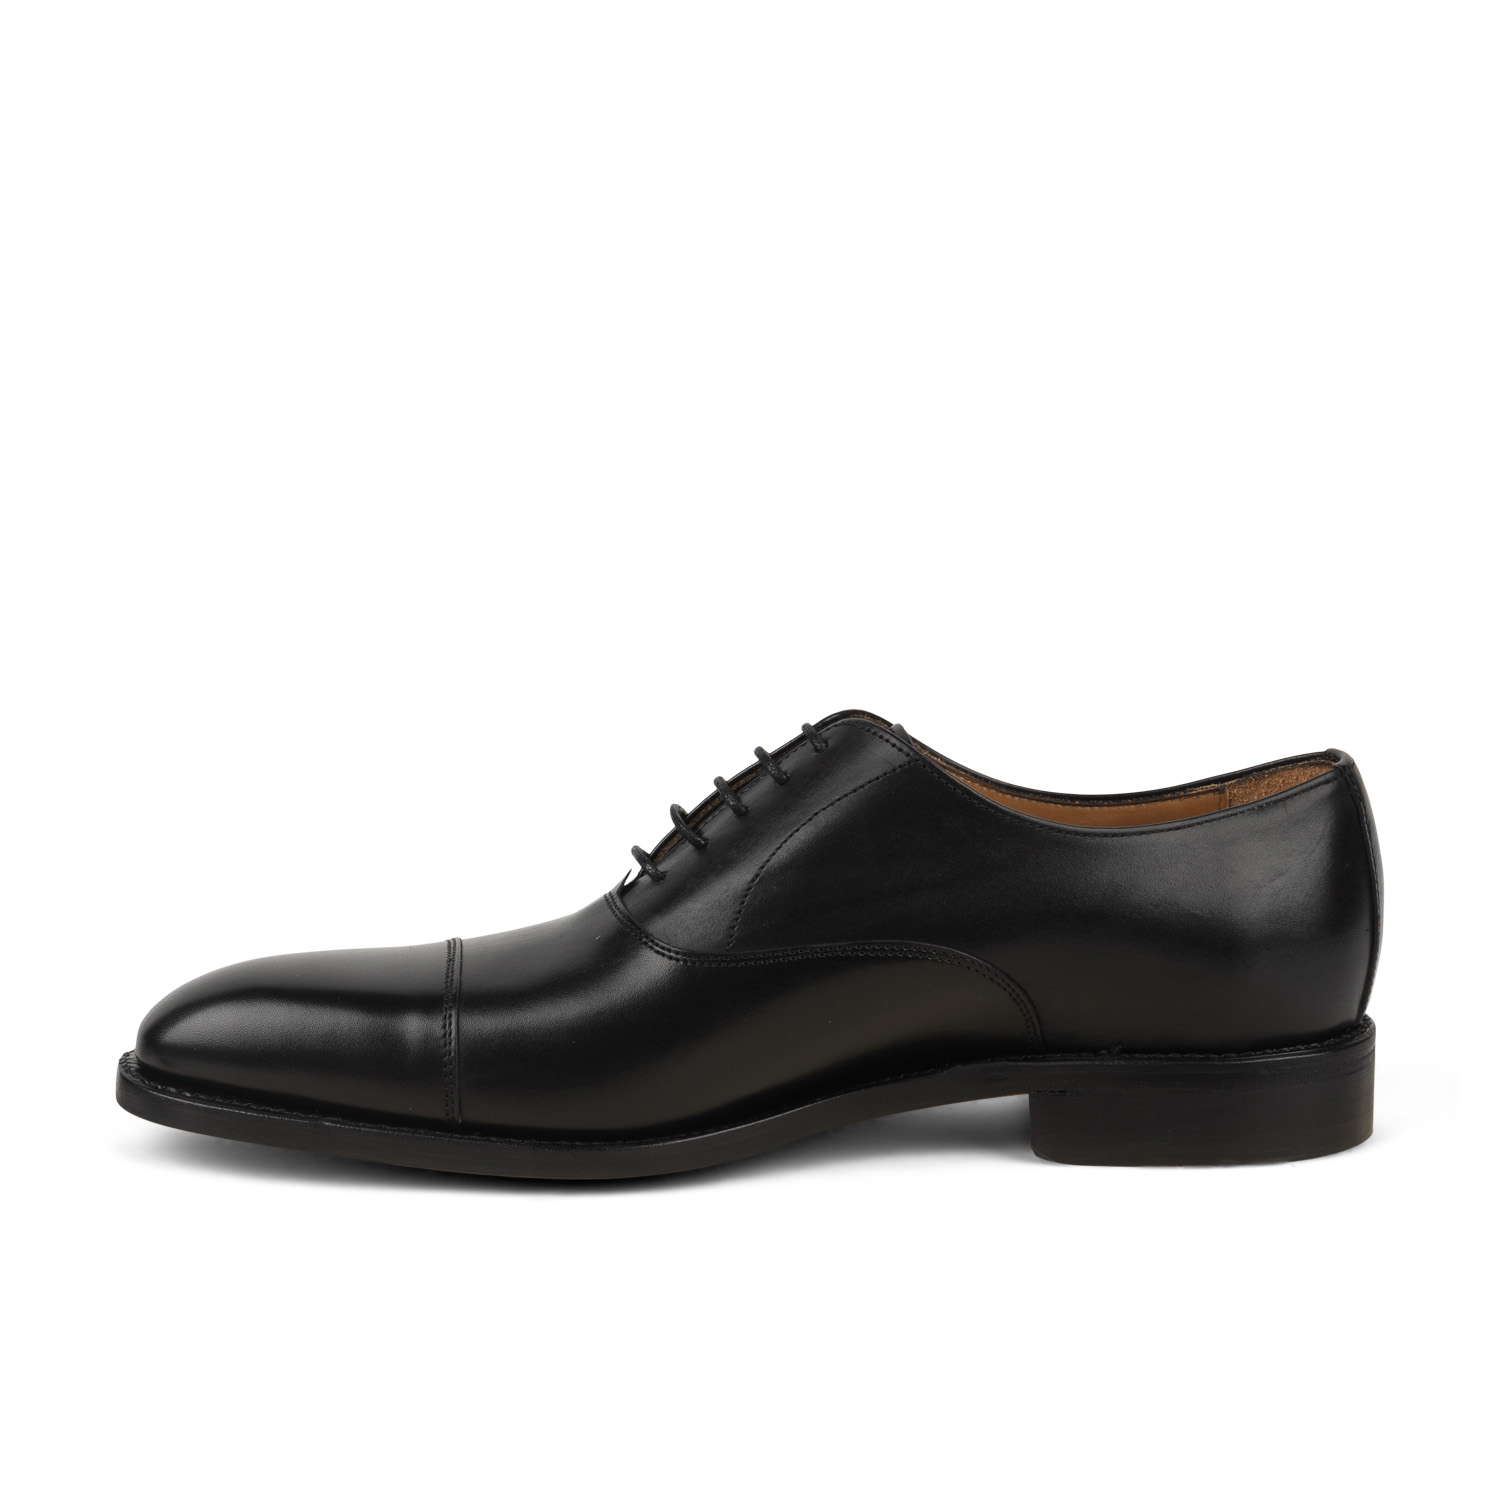 04 - EXFORRO - BERWICK - Chaussures à lacets - Cuir